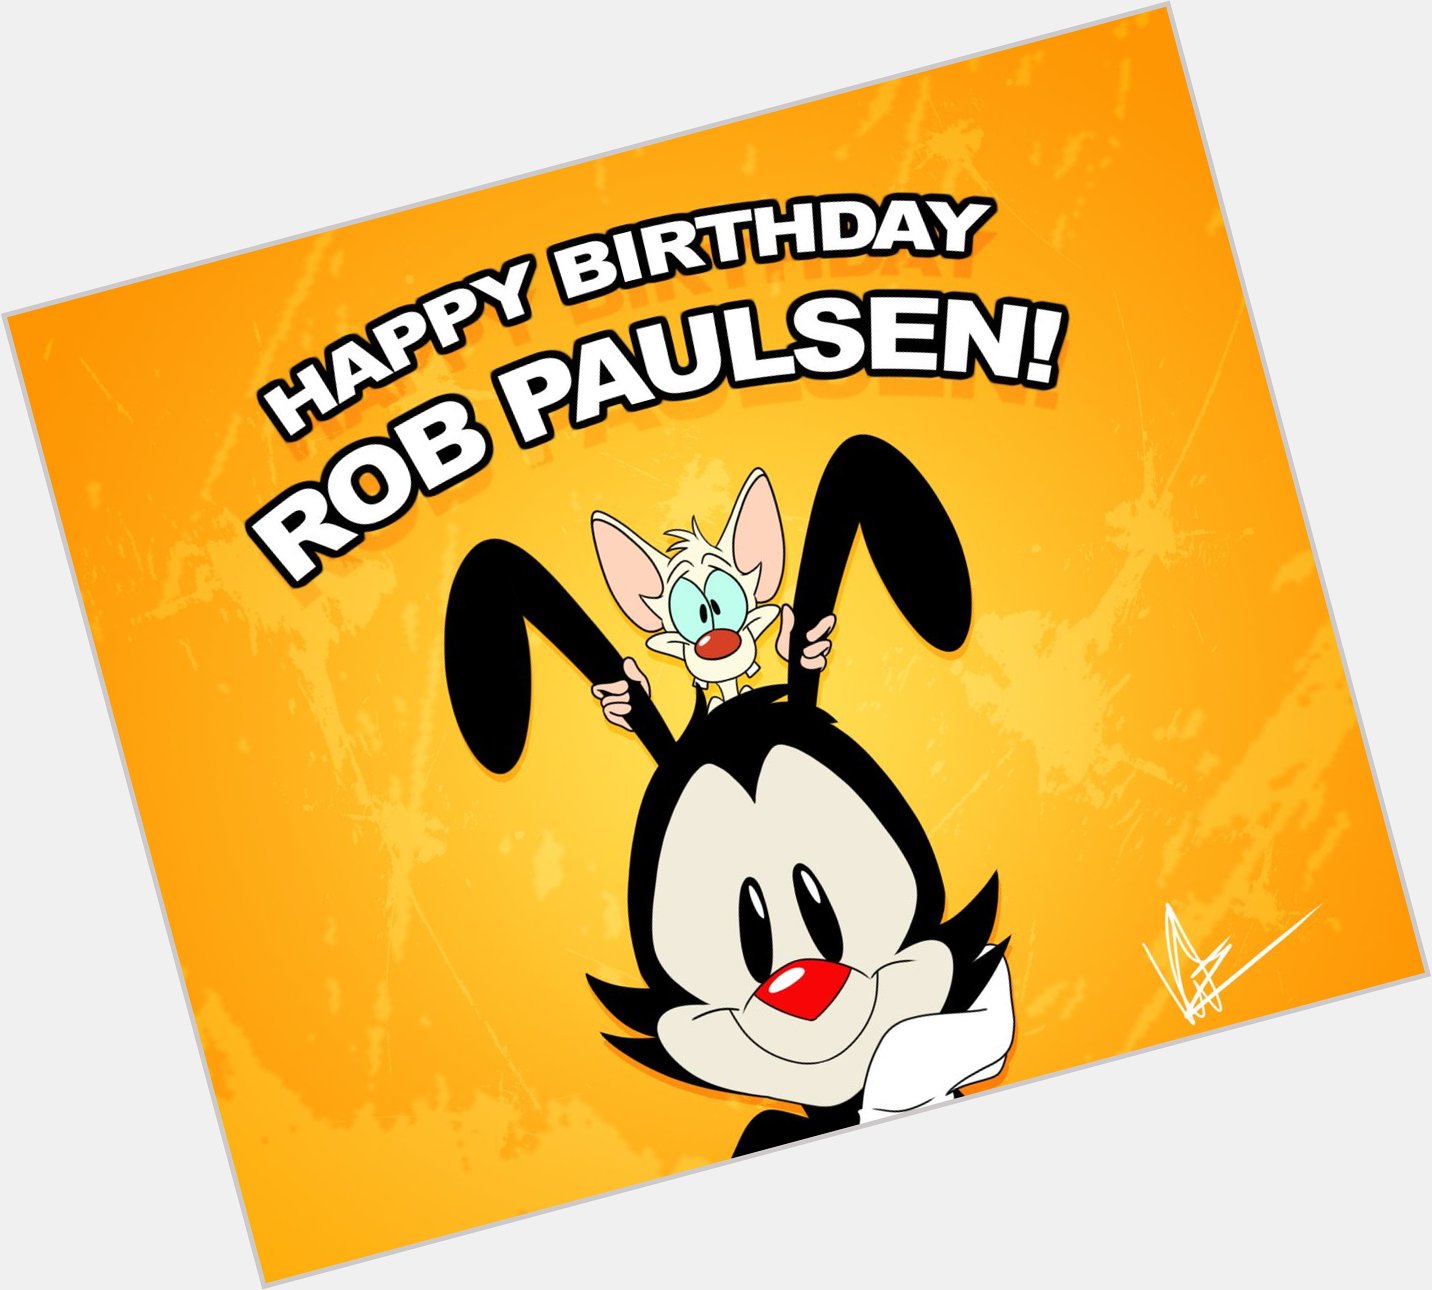 Today is Rob Paulsen Birthday

Happy Birthday Rob
Hope your having a good birthday 